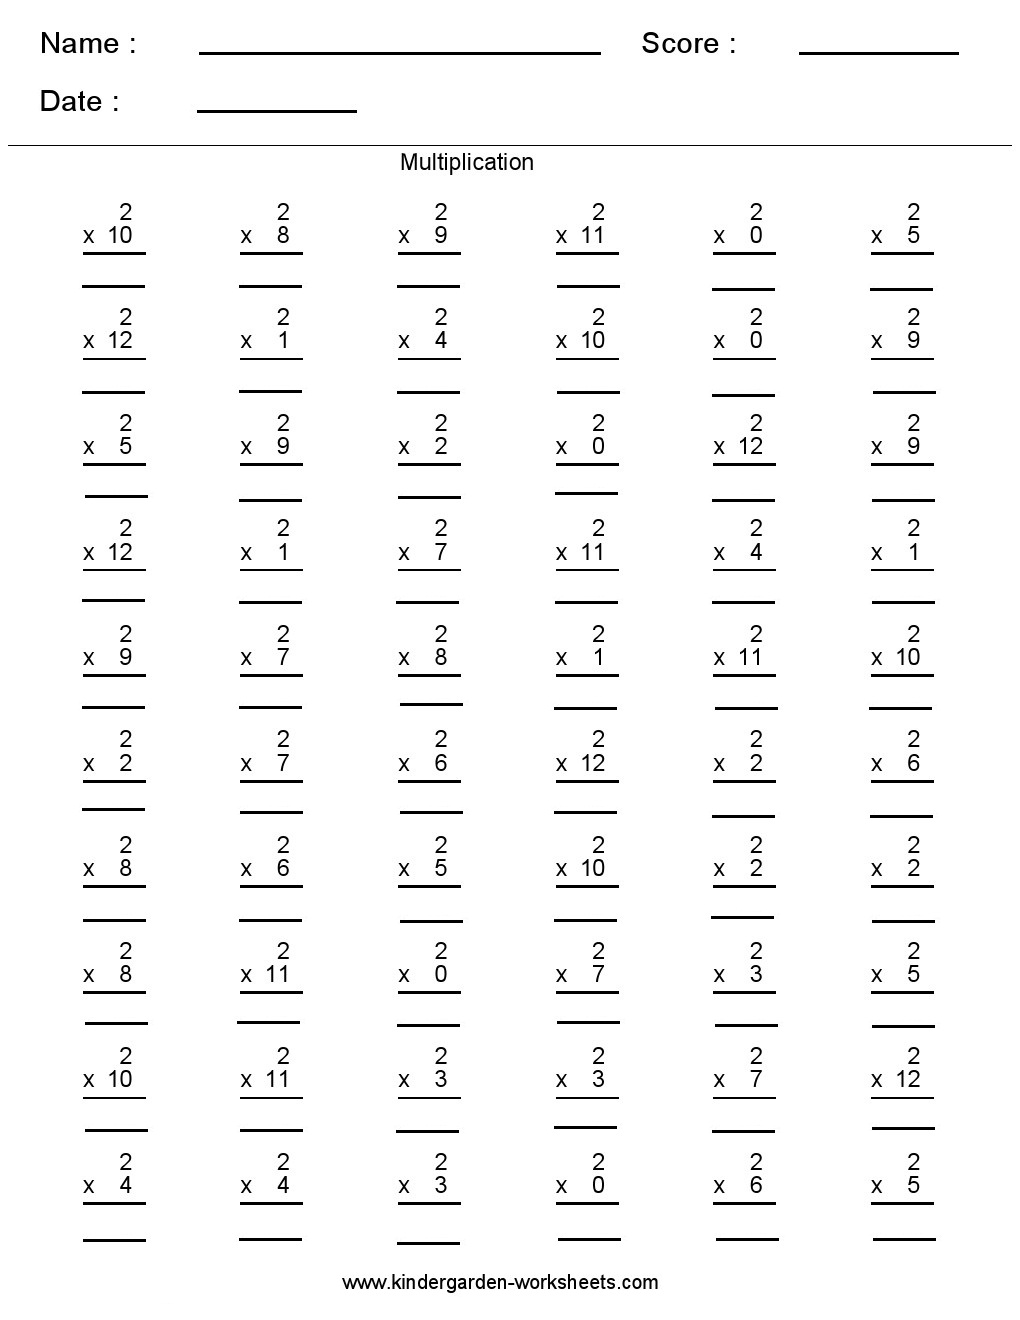 15 Best Images of 5th Grade Multiplication Worksheets 5th Grade Math